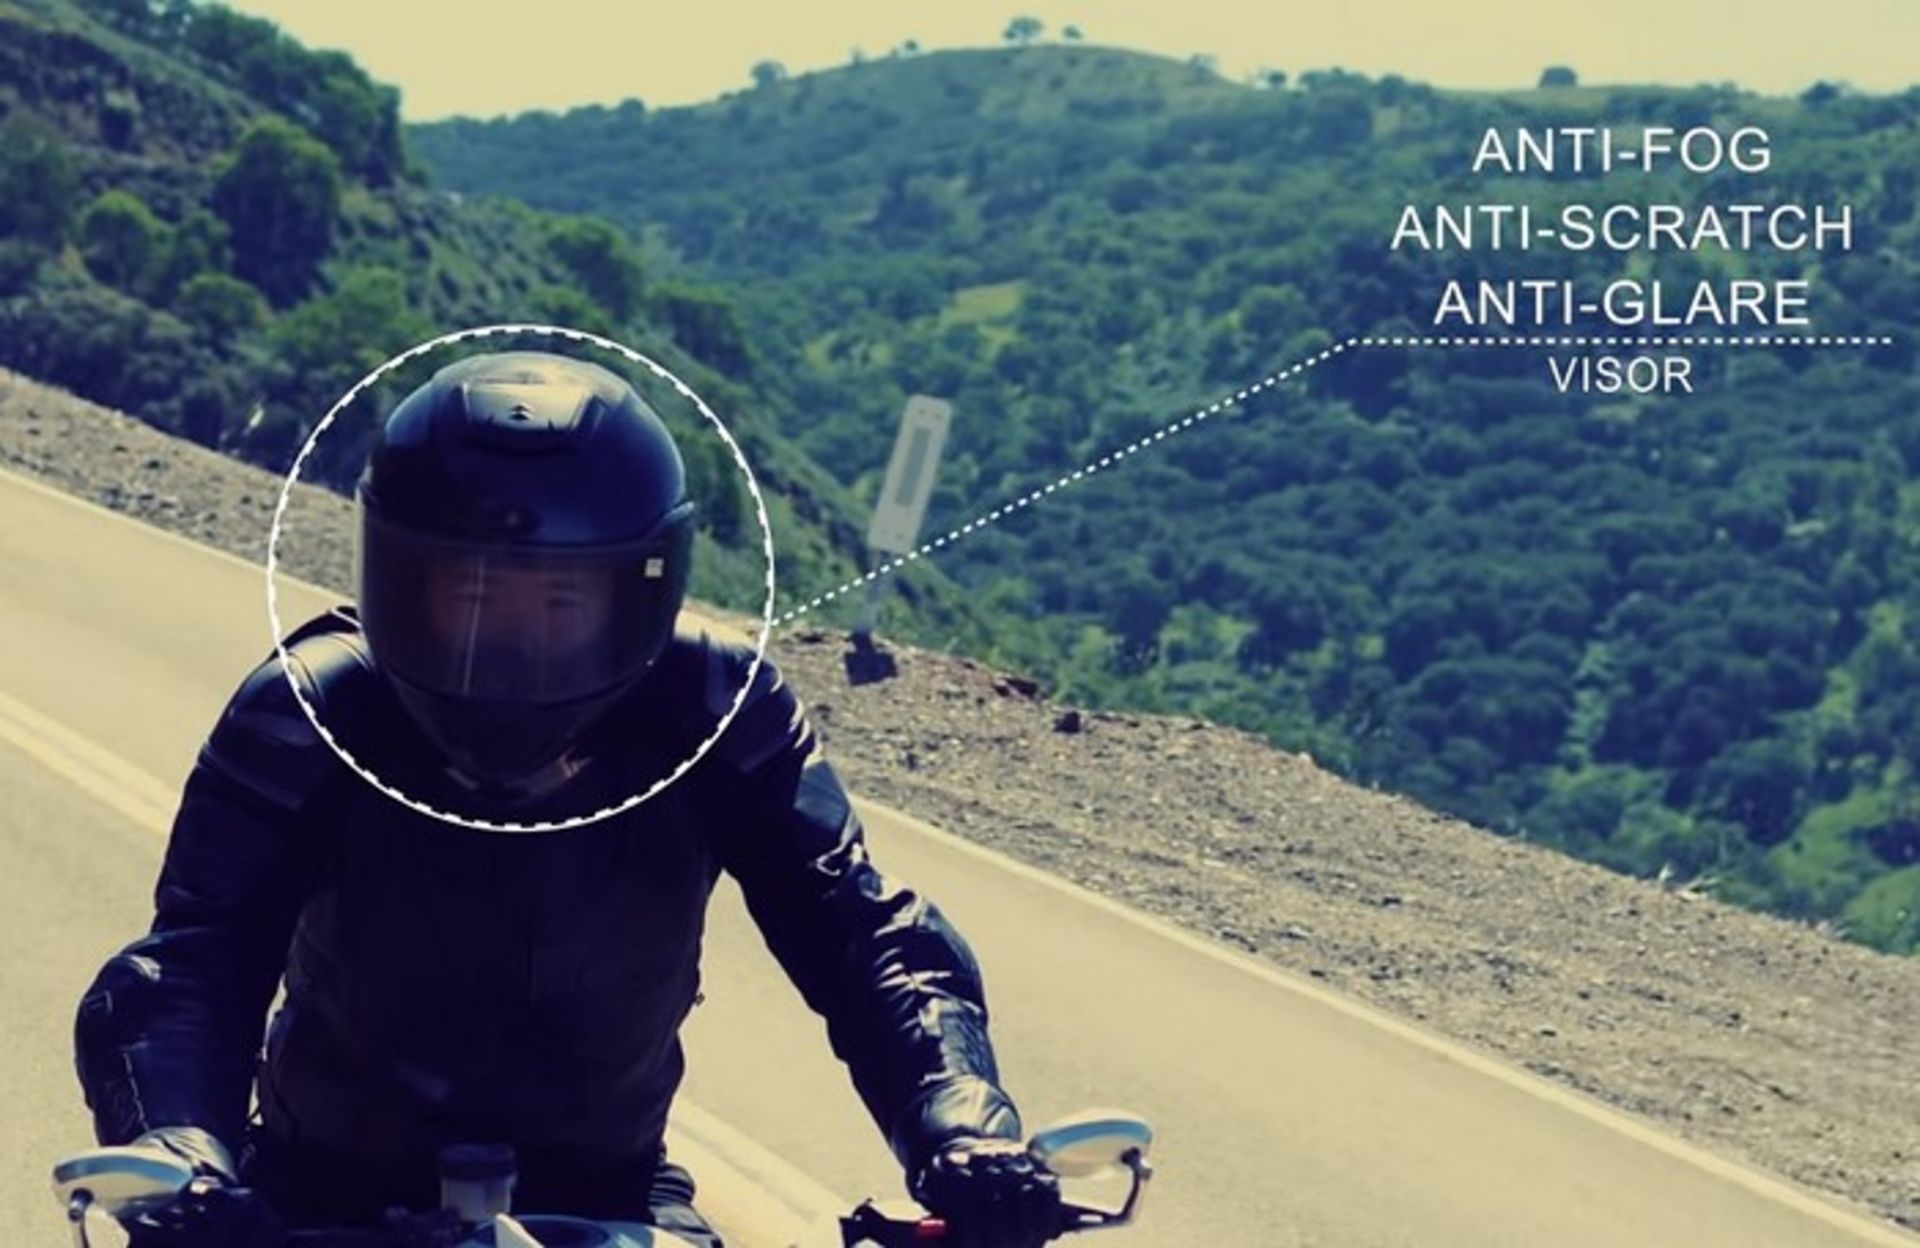 Jarvish X-AR smart motorcycle helmet